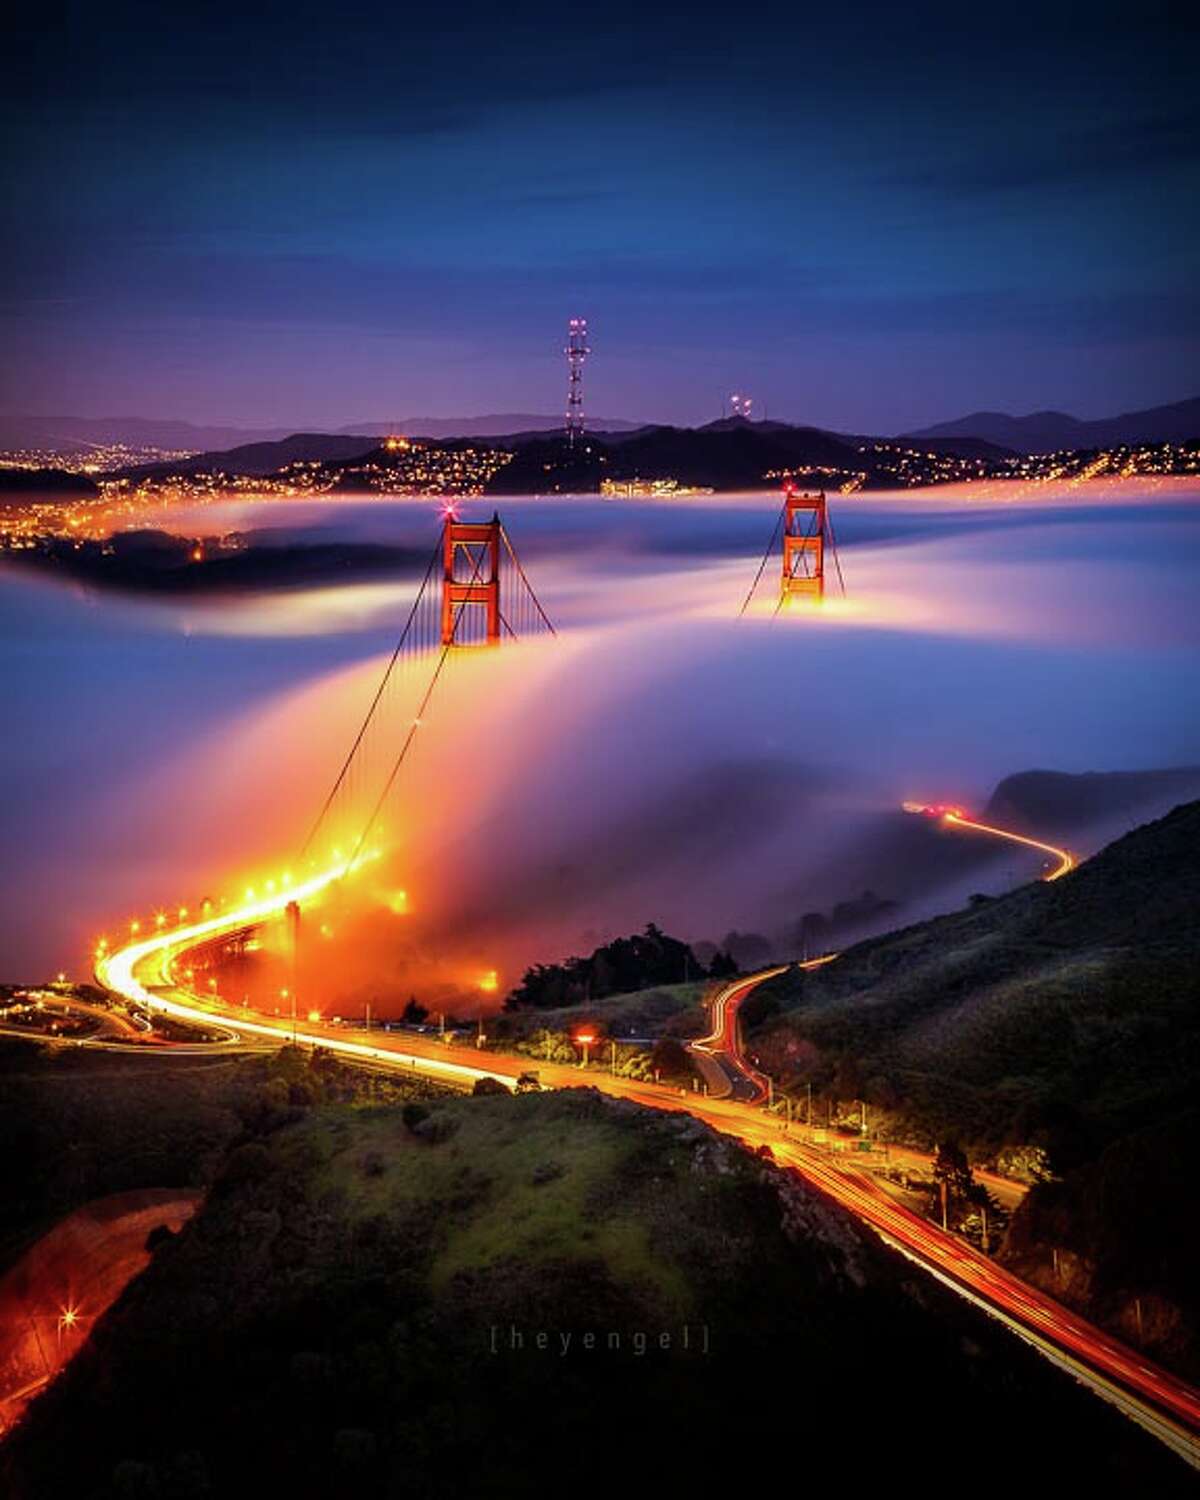 The Golden Gate Bridge meets Karl the Fog